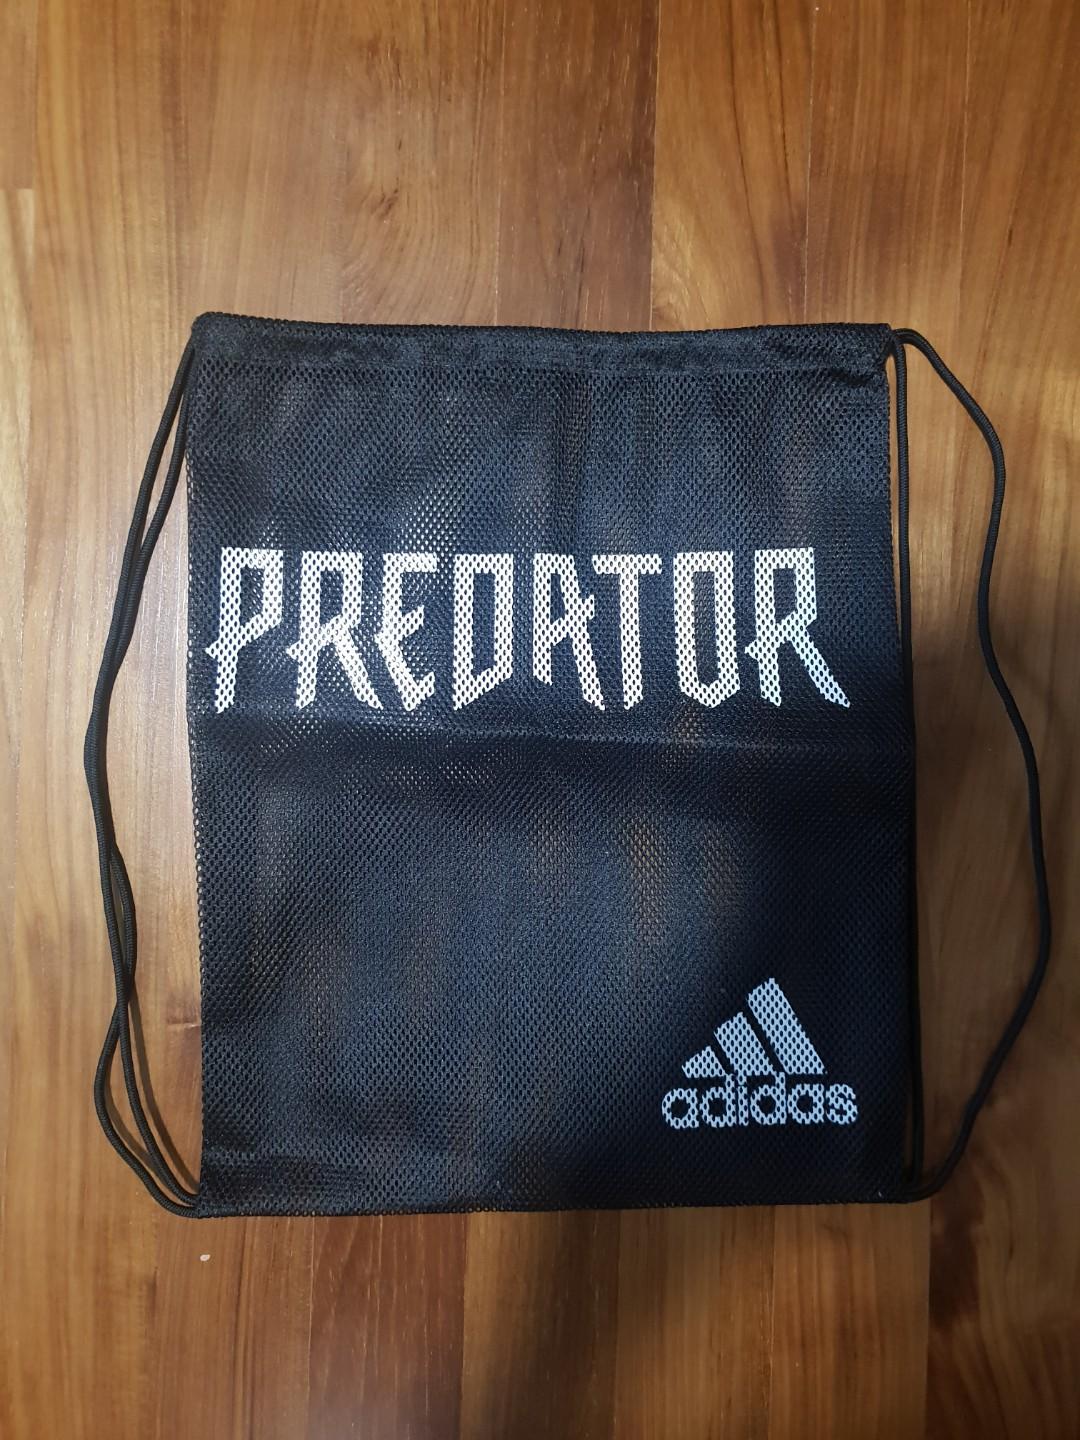 adidas predator string bag